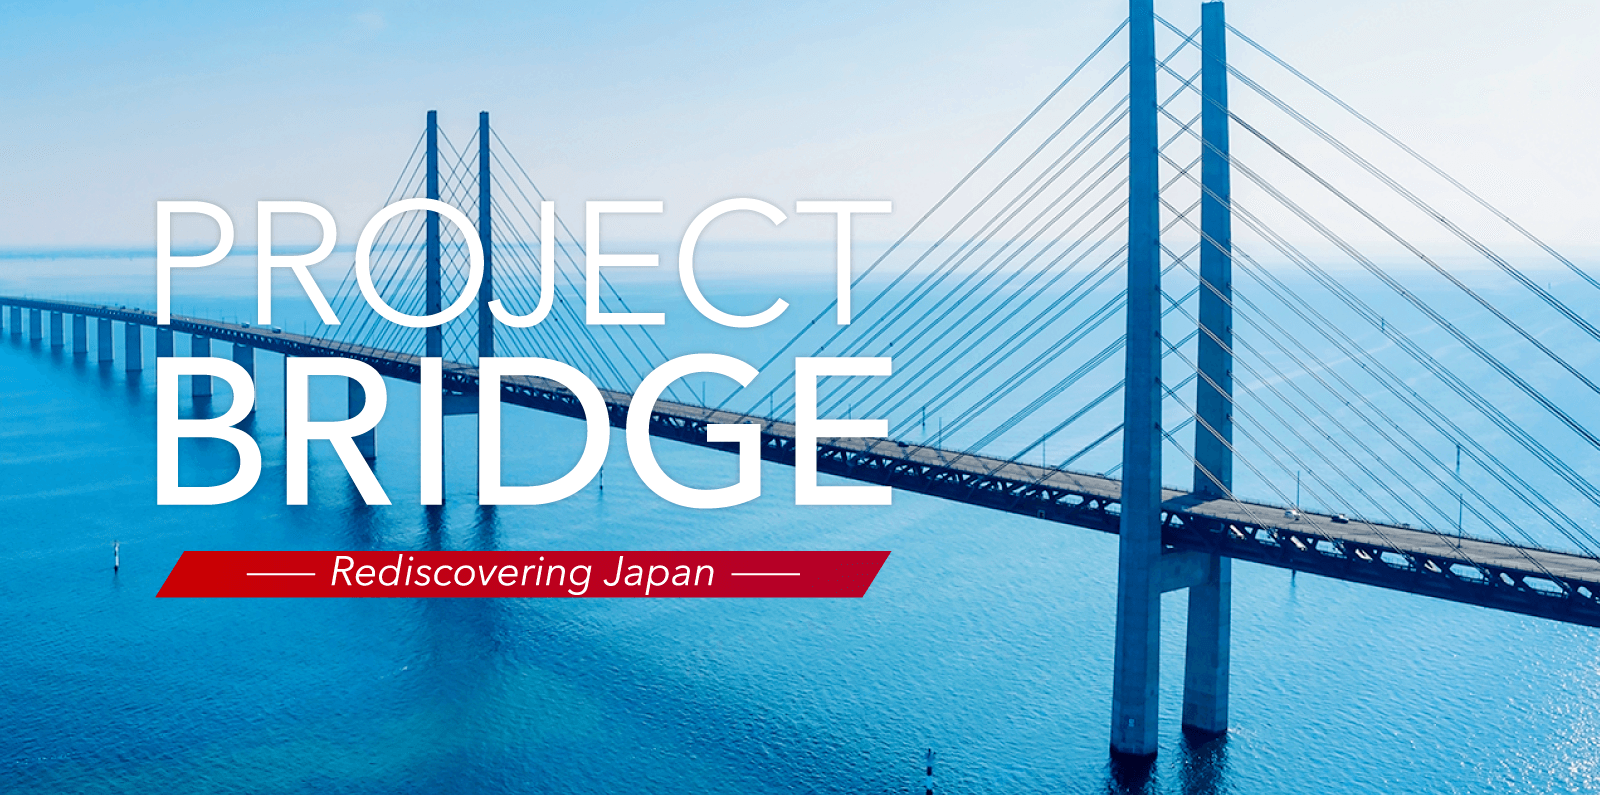 PROJECT BRIDGE -Rediscovering Japan-